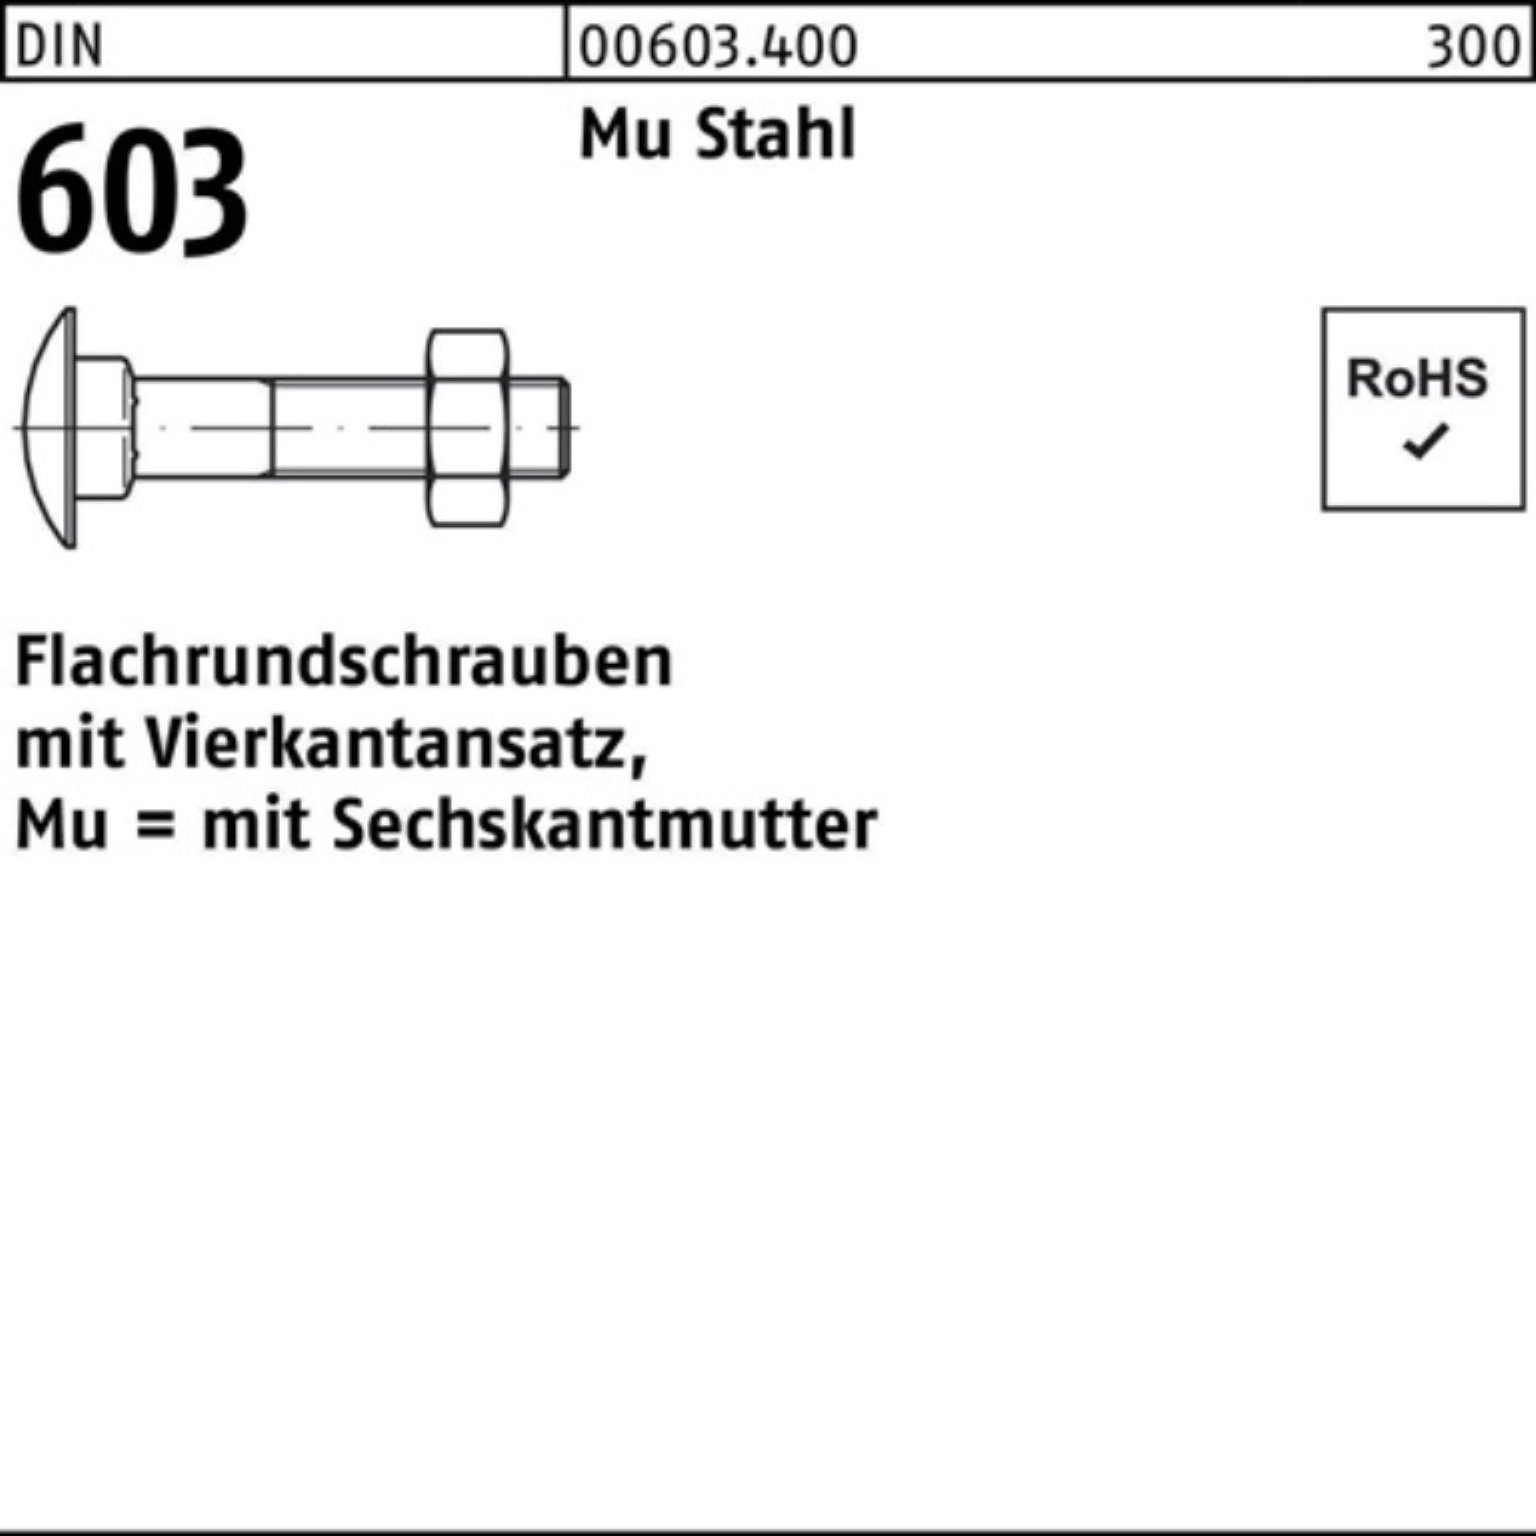 Reyher Schraube 100er Pack Vierkantansatz/6-ktmutter M16x160 Flachrundschraube DIN 603